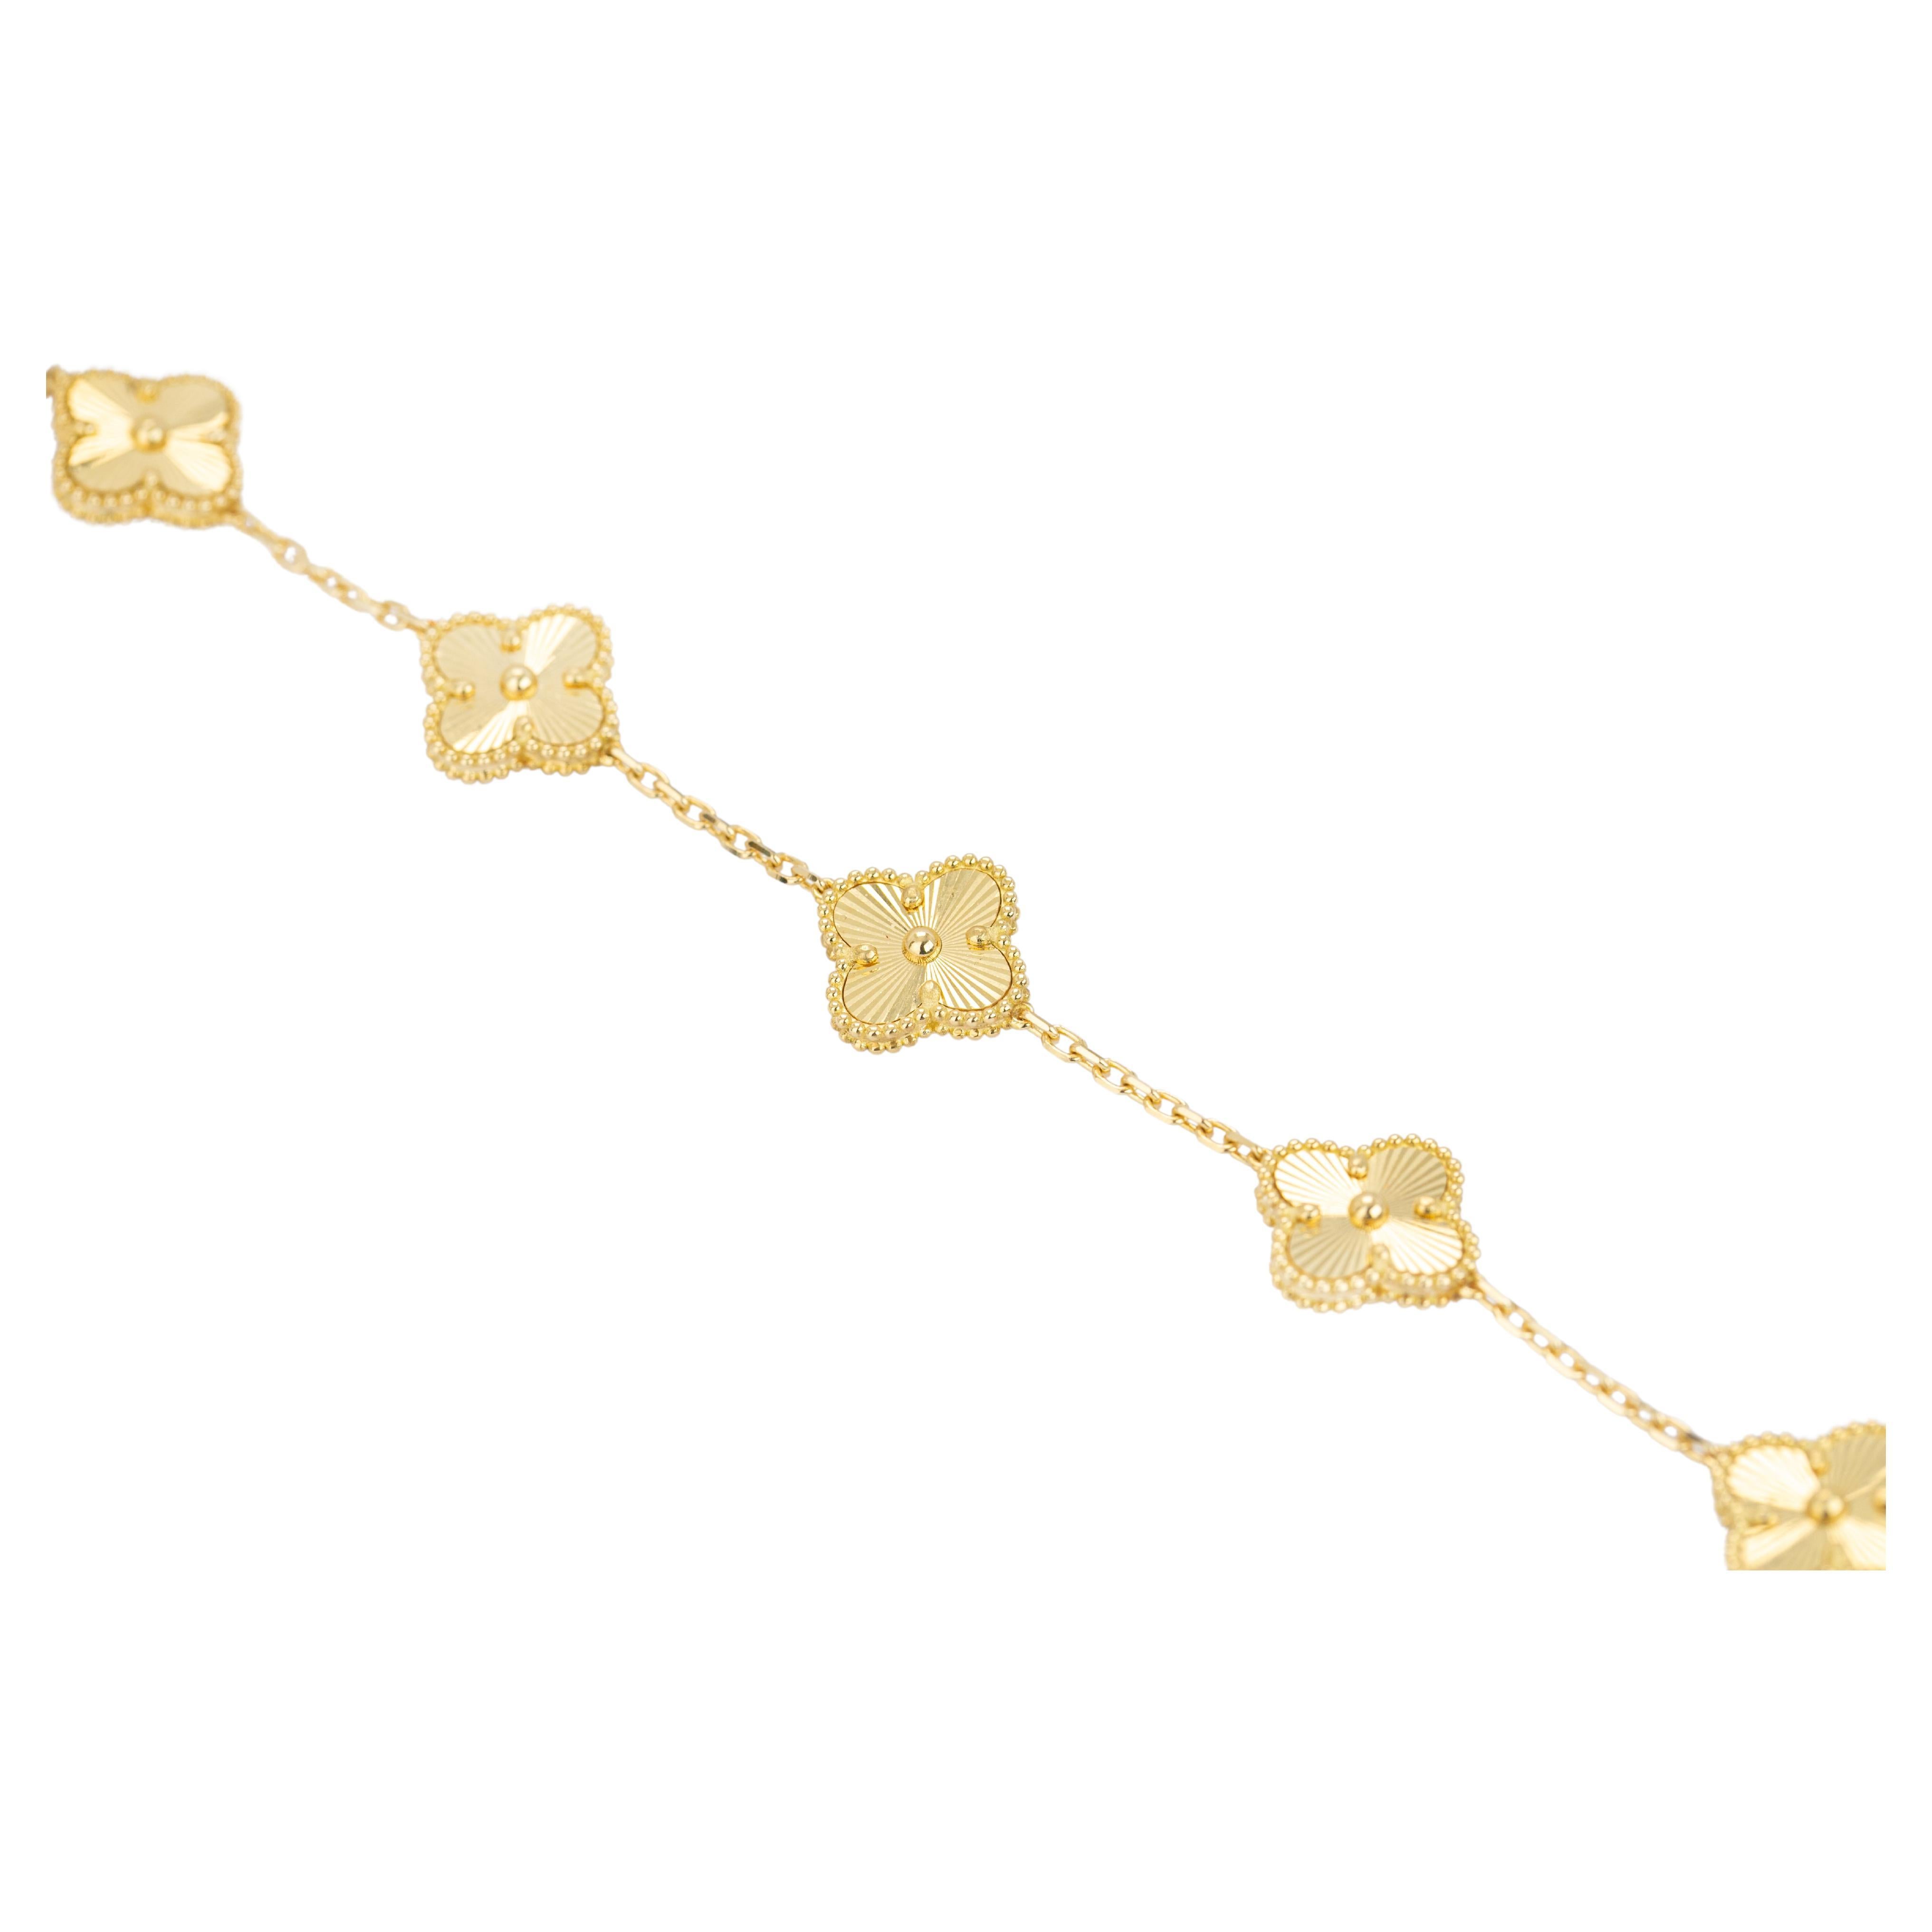 Bracelet en or 18k avec chaîne audacieuse, bracelet en chaîne en or 18k, bracelet rectangulaire